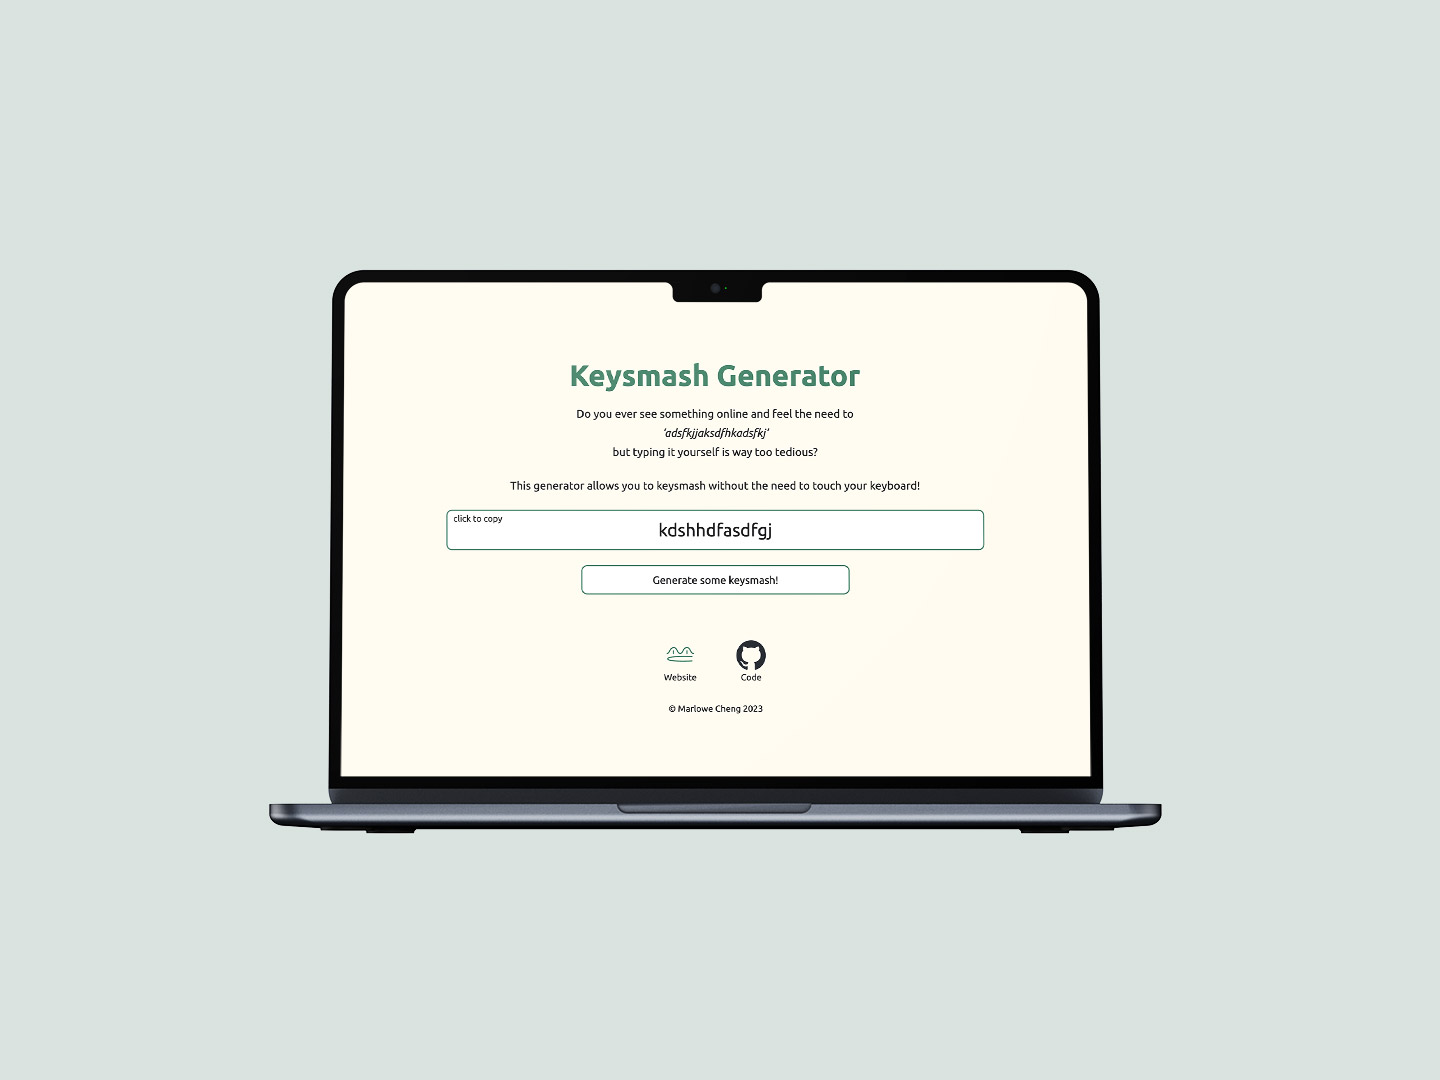 Keysmash generator mocked up on a computer